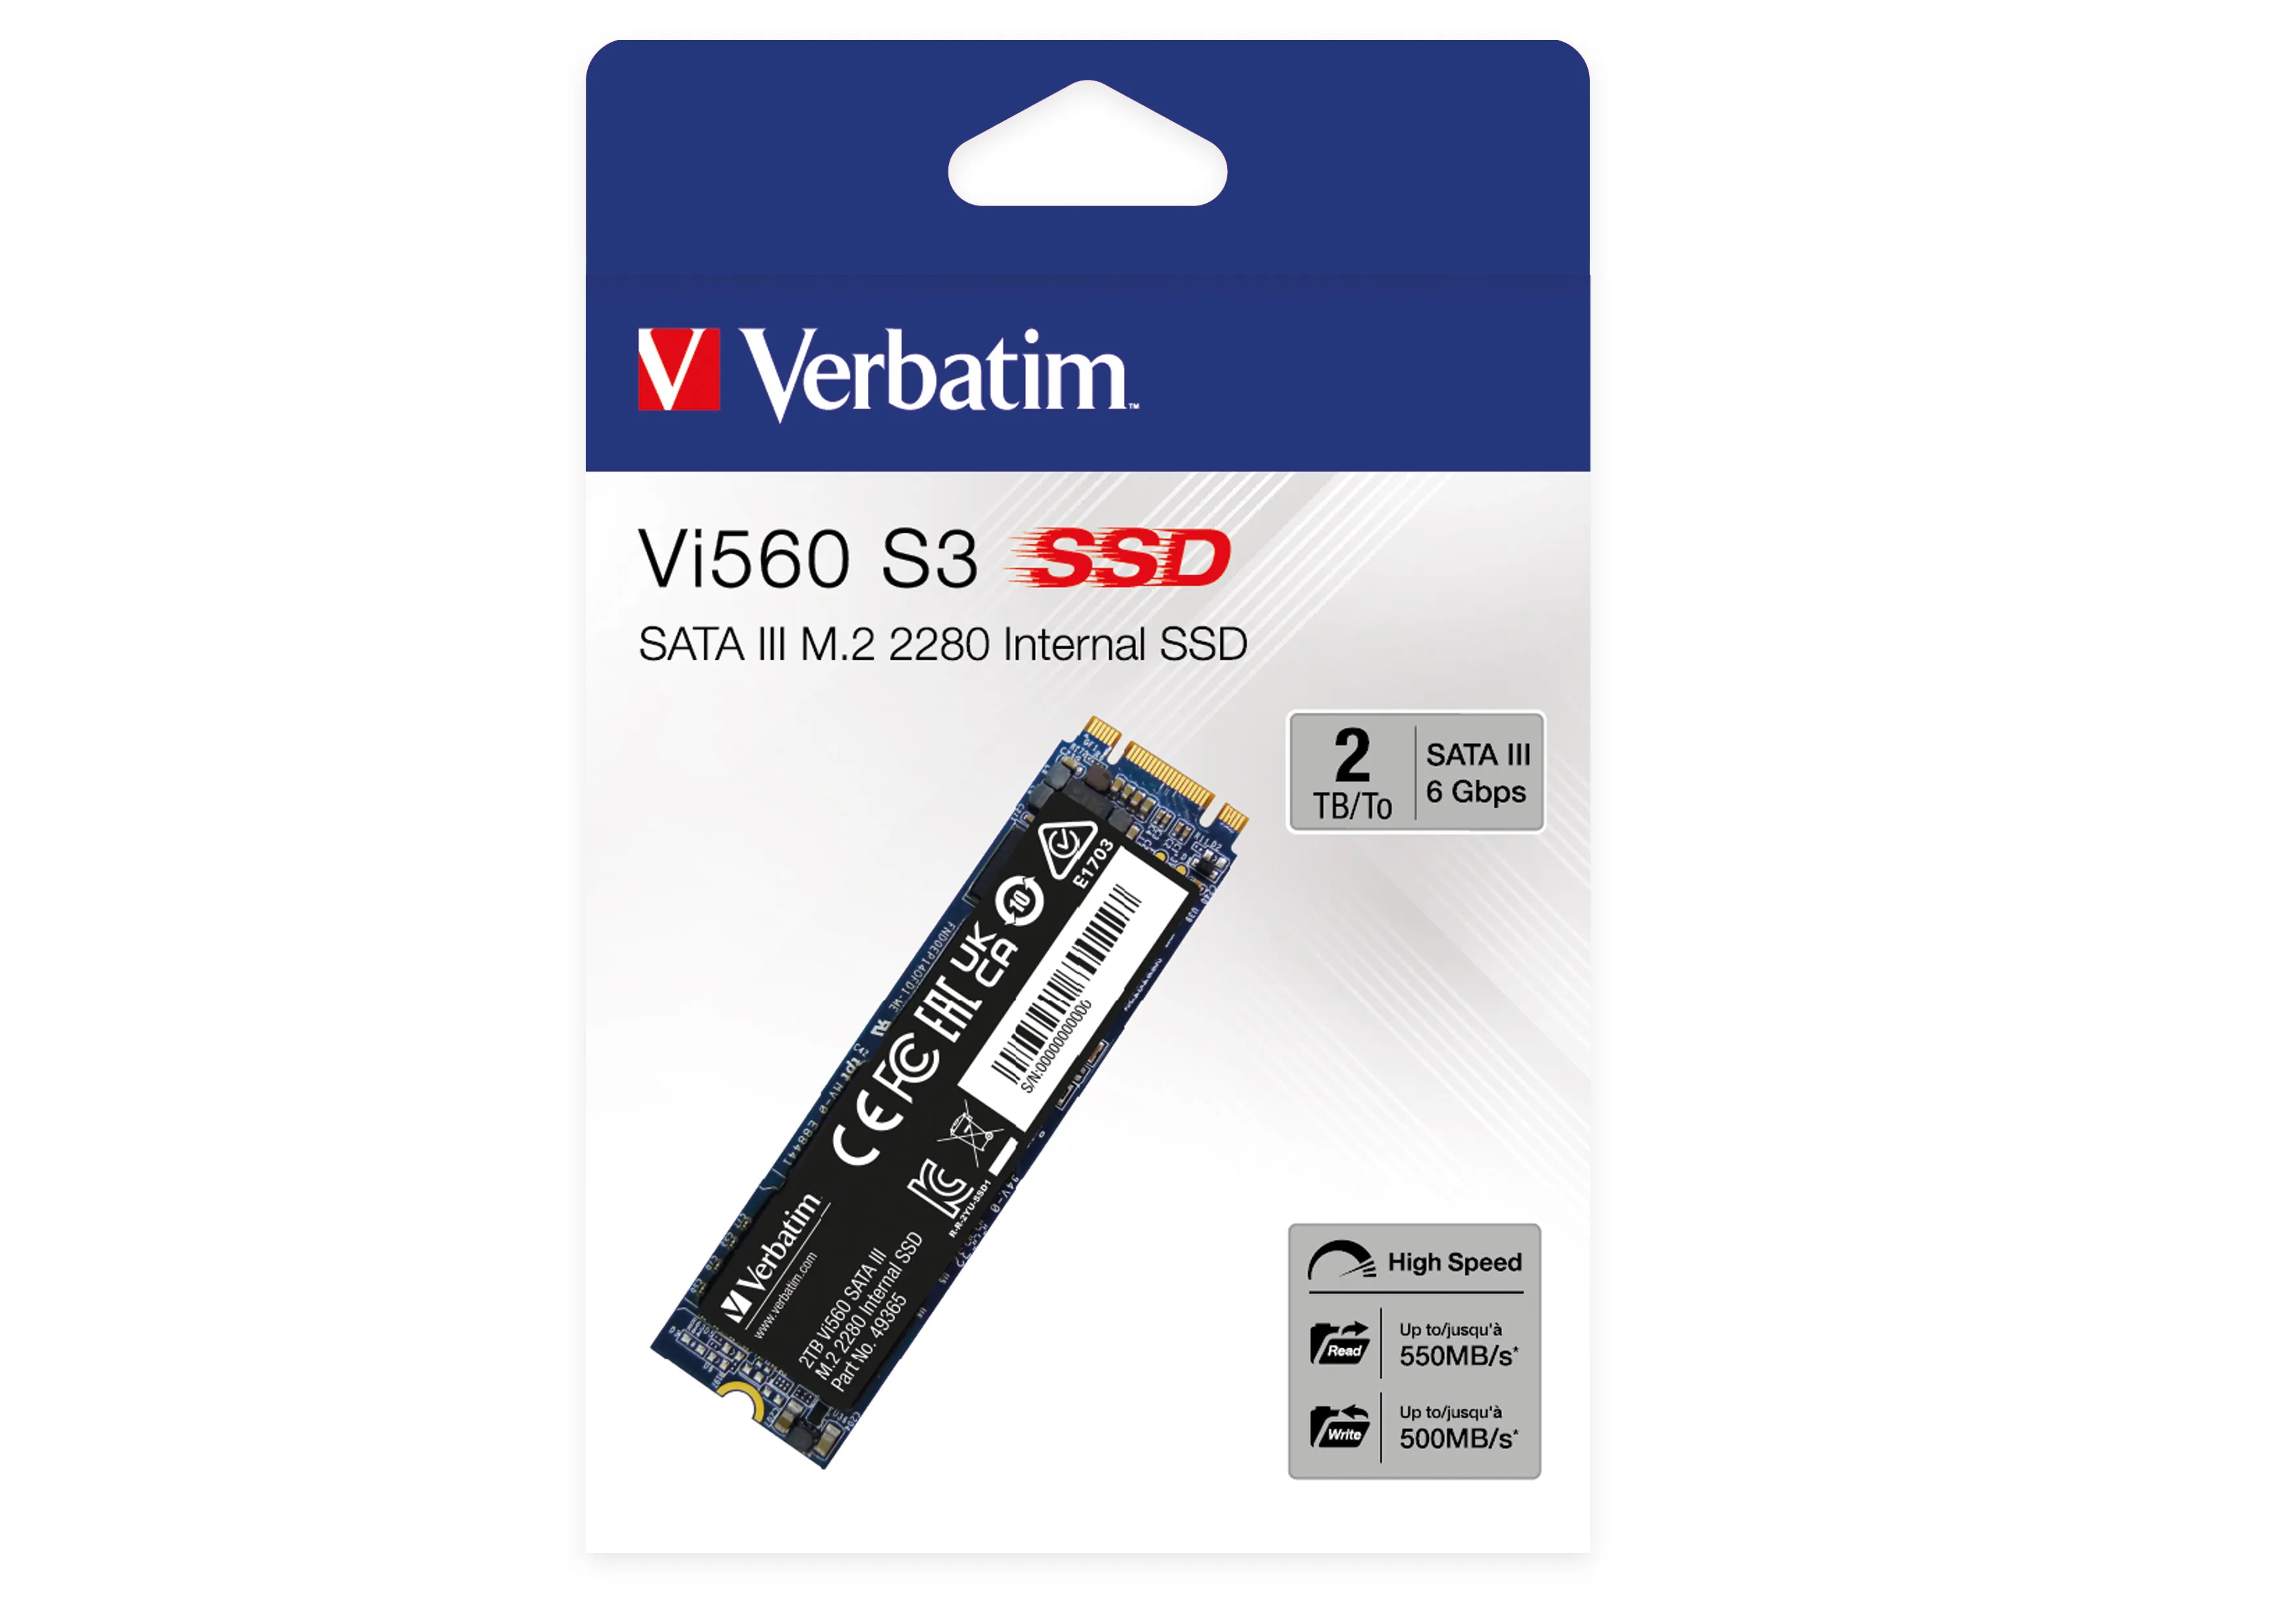 Vente Verbatim Vi560 S3 Verbatim au meilleur prix - visuel 6